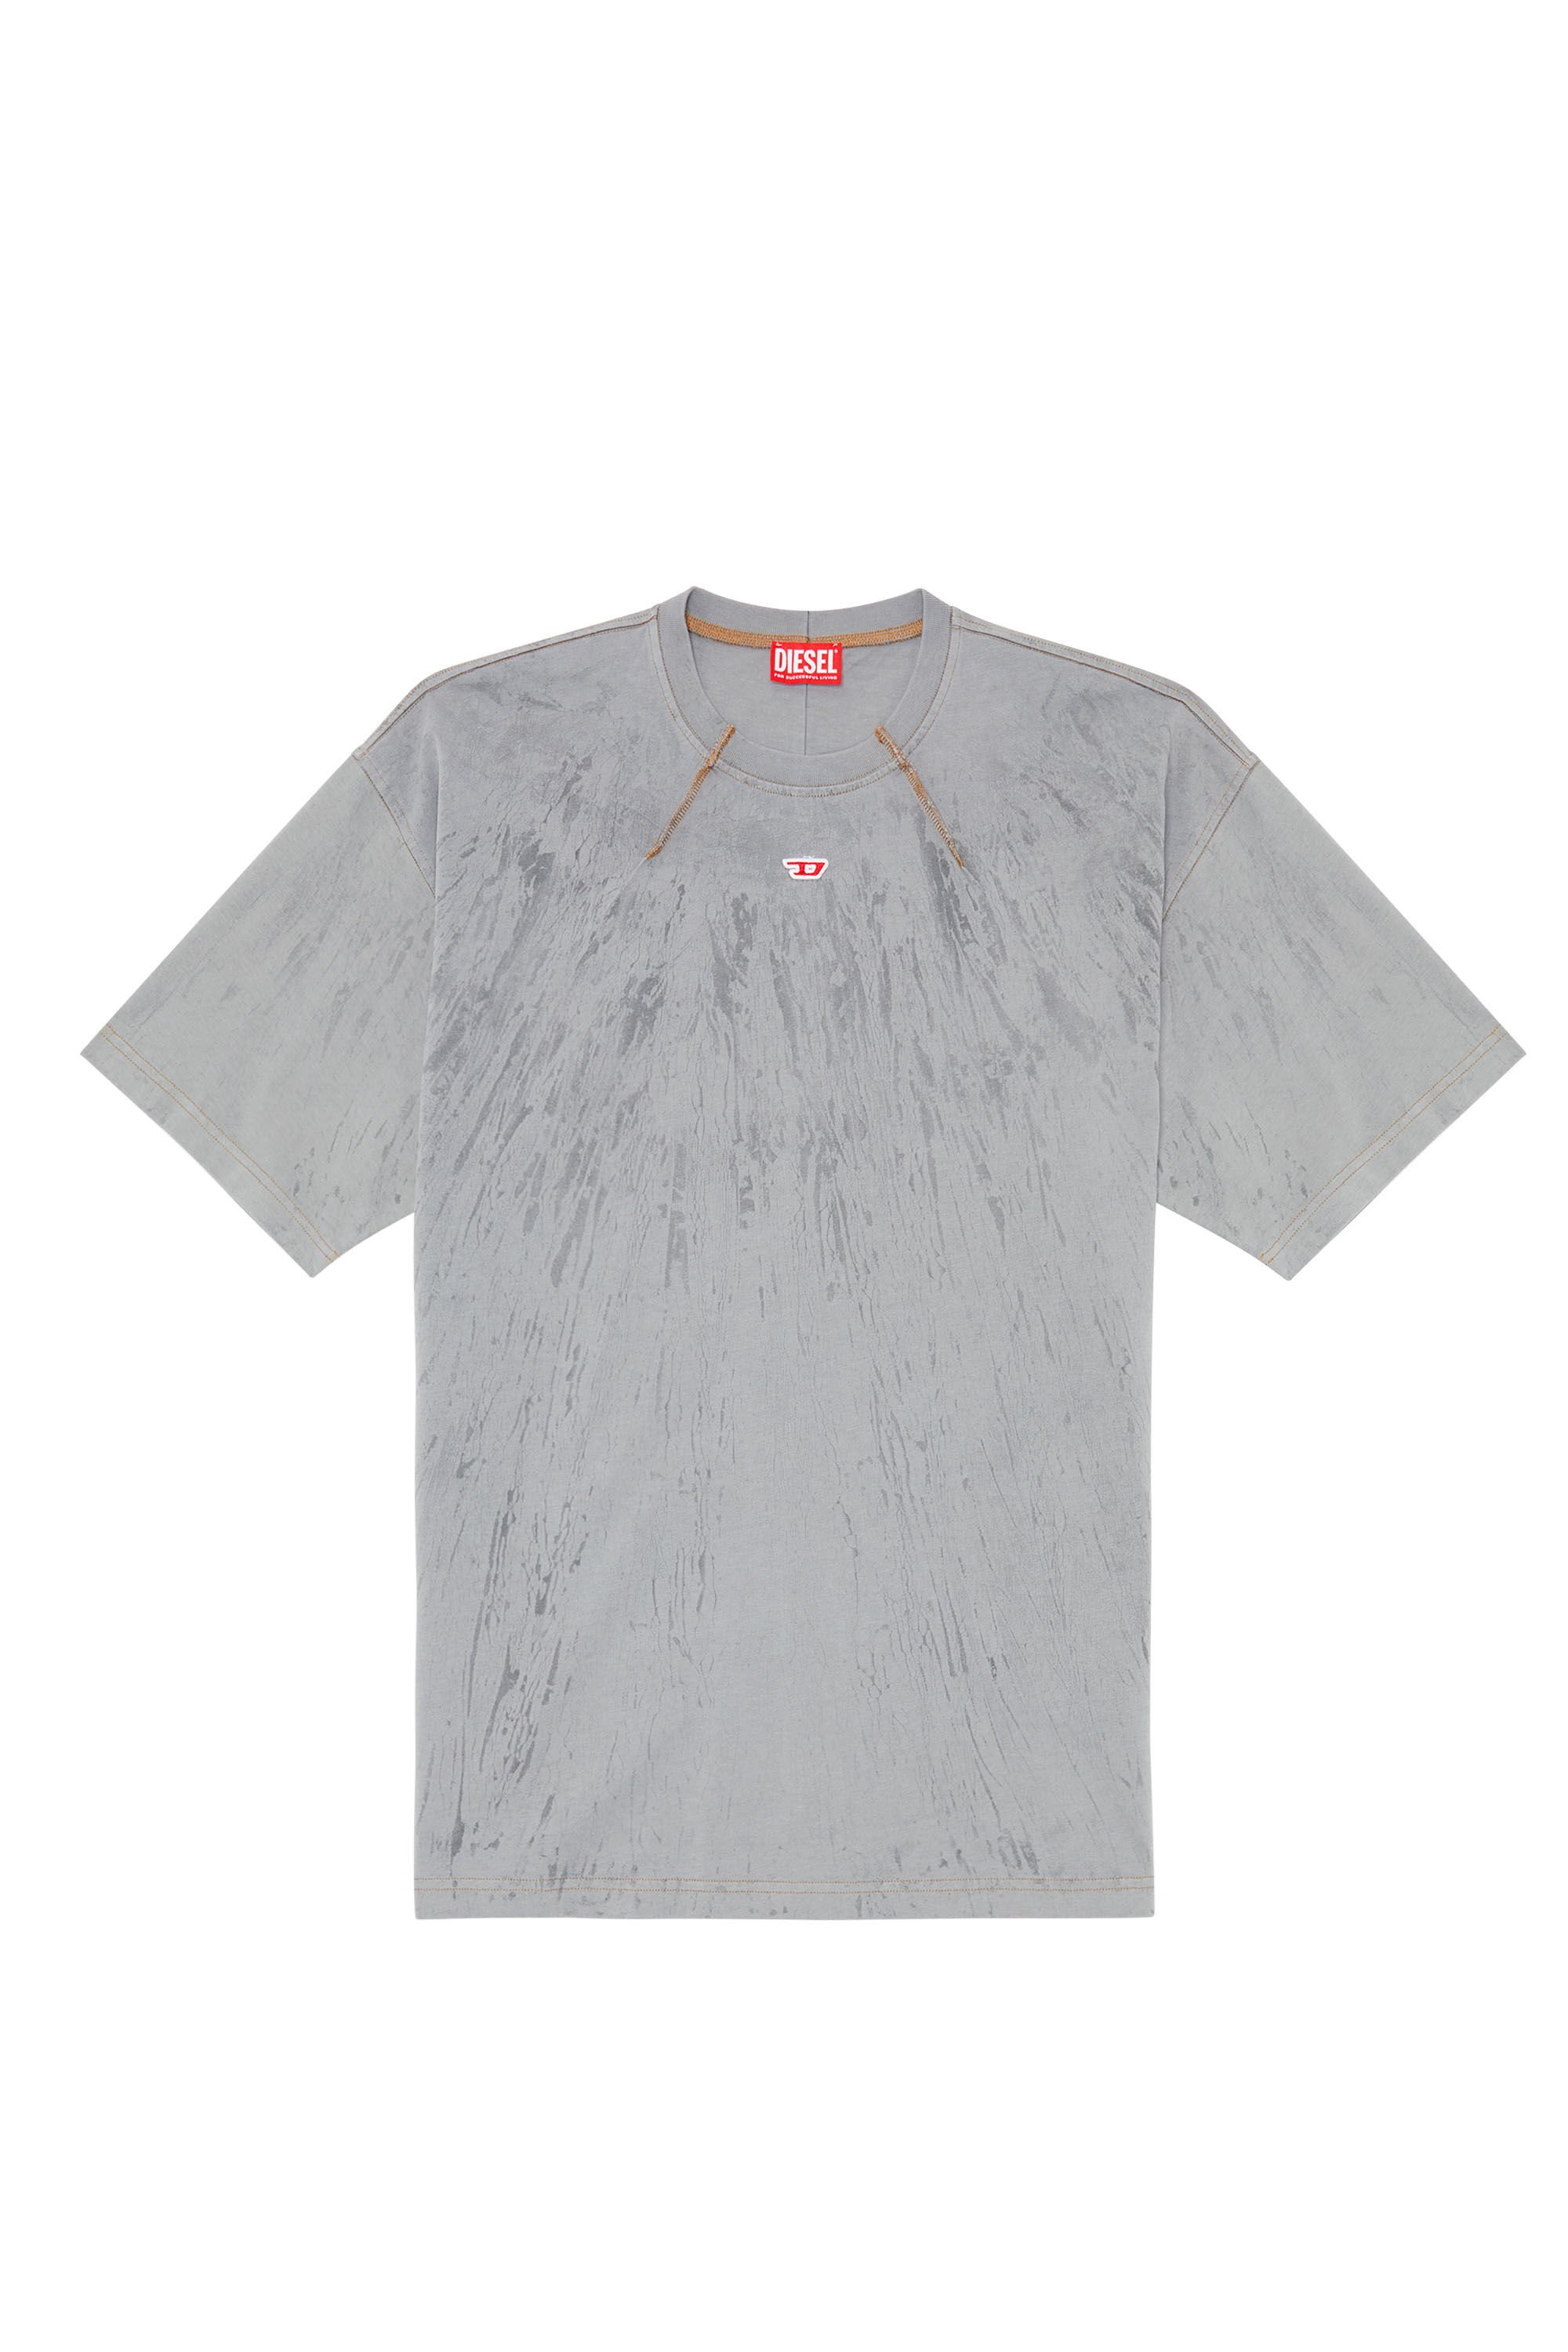 Diesel - T-COS, Man T-shirt in plaster effect jersey in Grey - Image 4